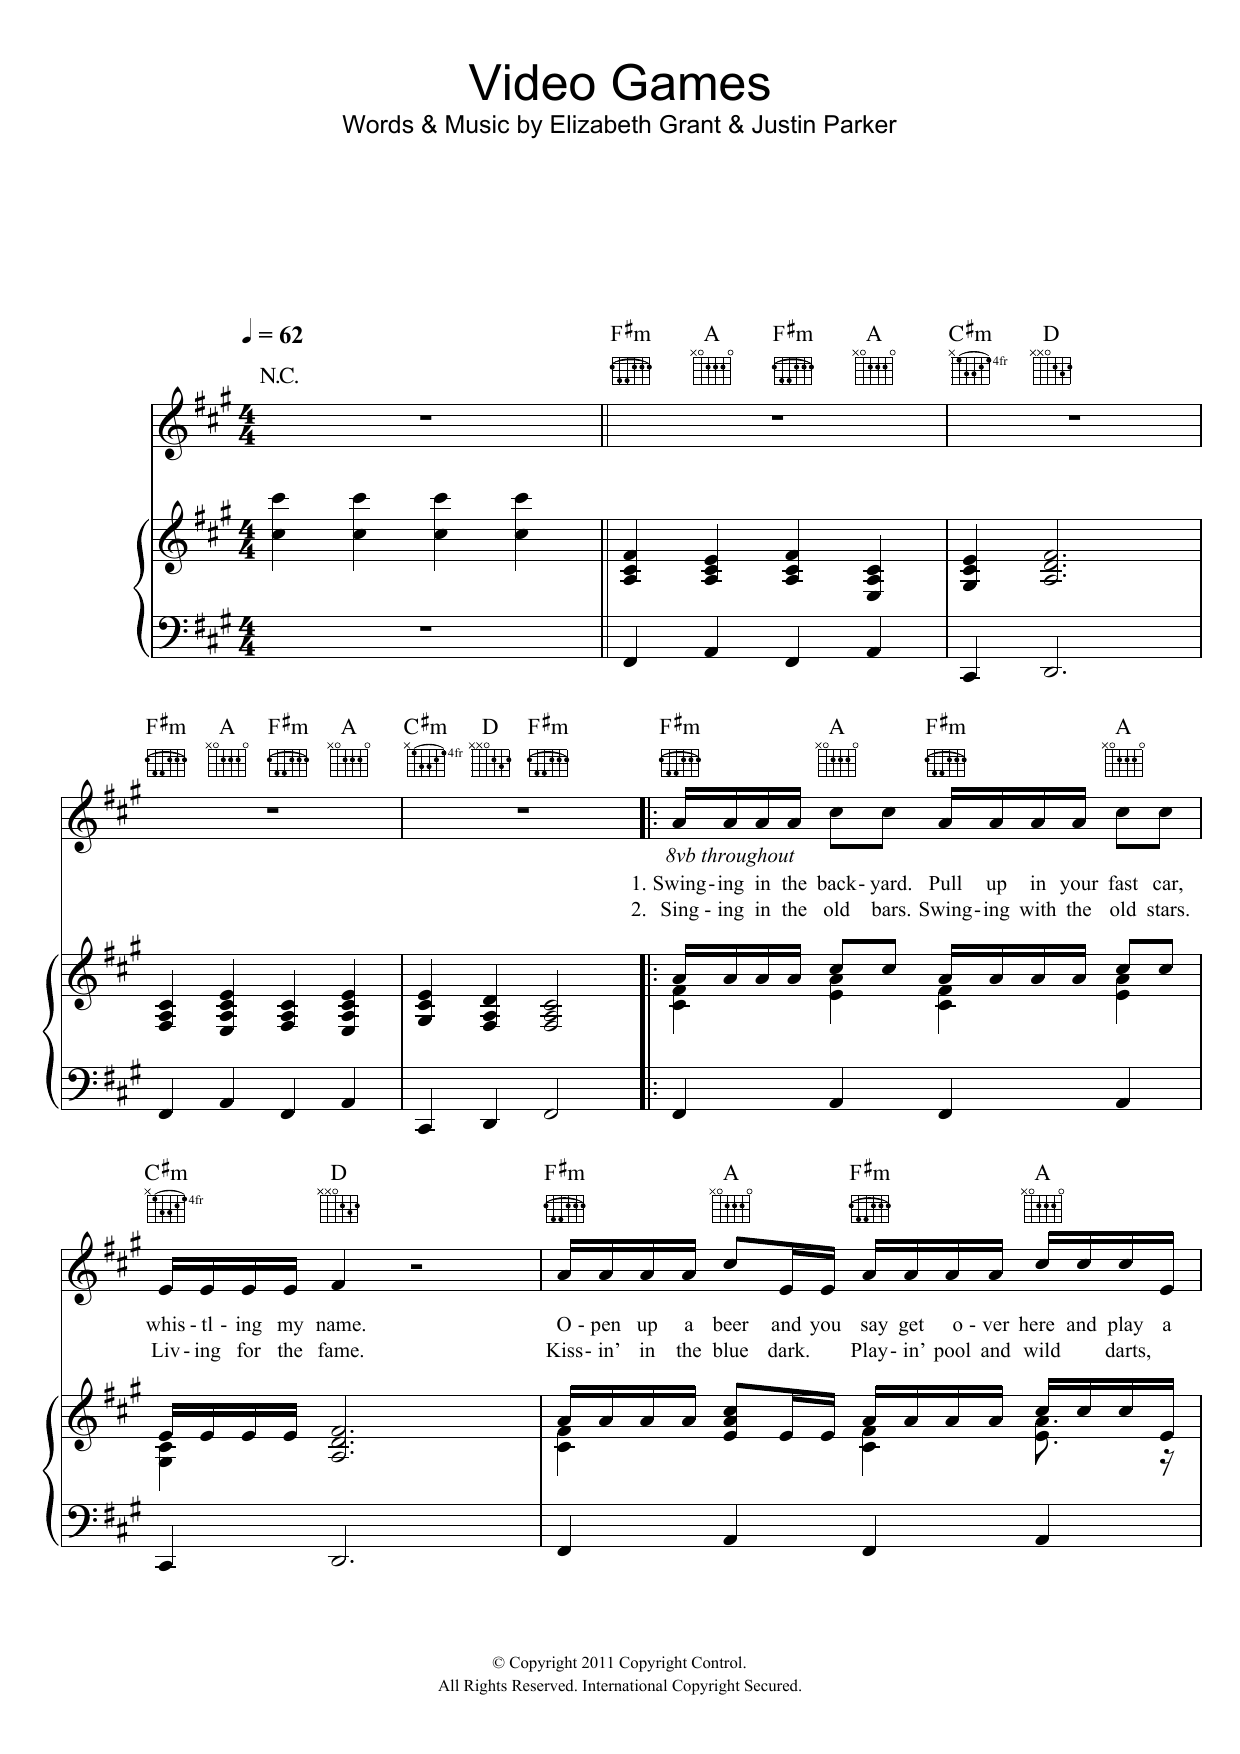 Lana Del Rey Video Games Sheet Music Notes & Chords for Guitar Chords/Lyrics - Download or Print PDF